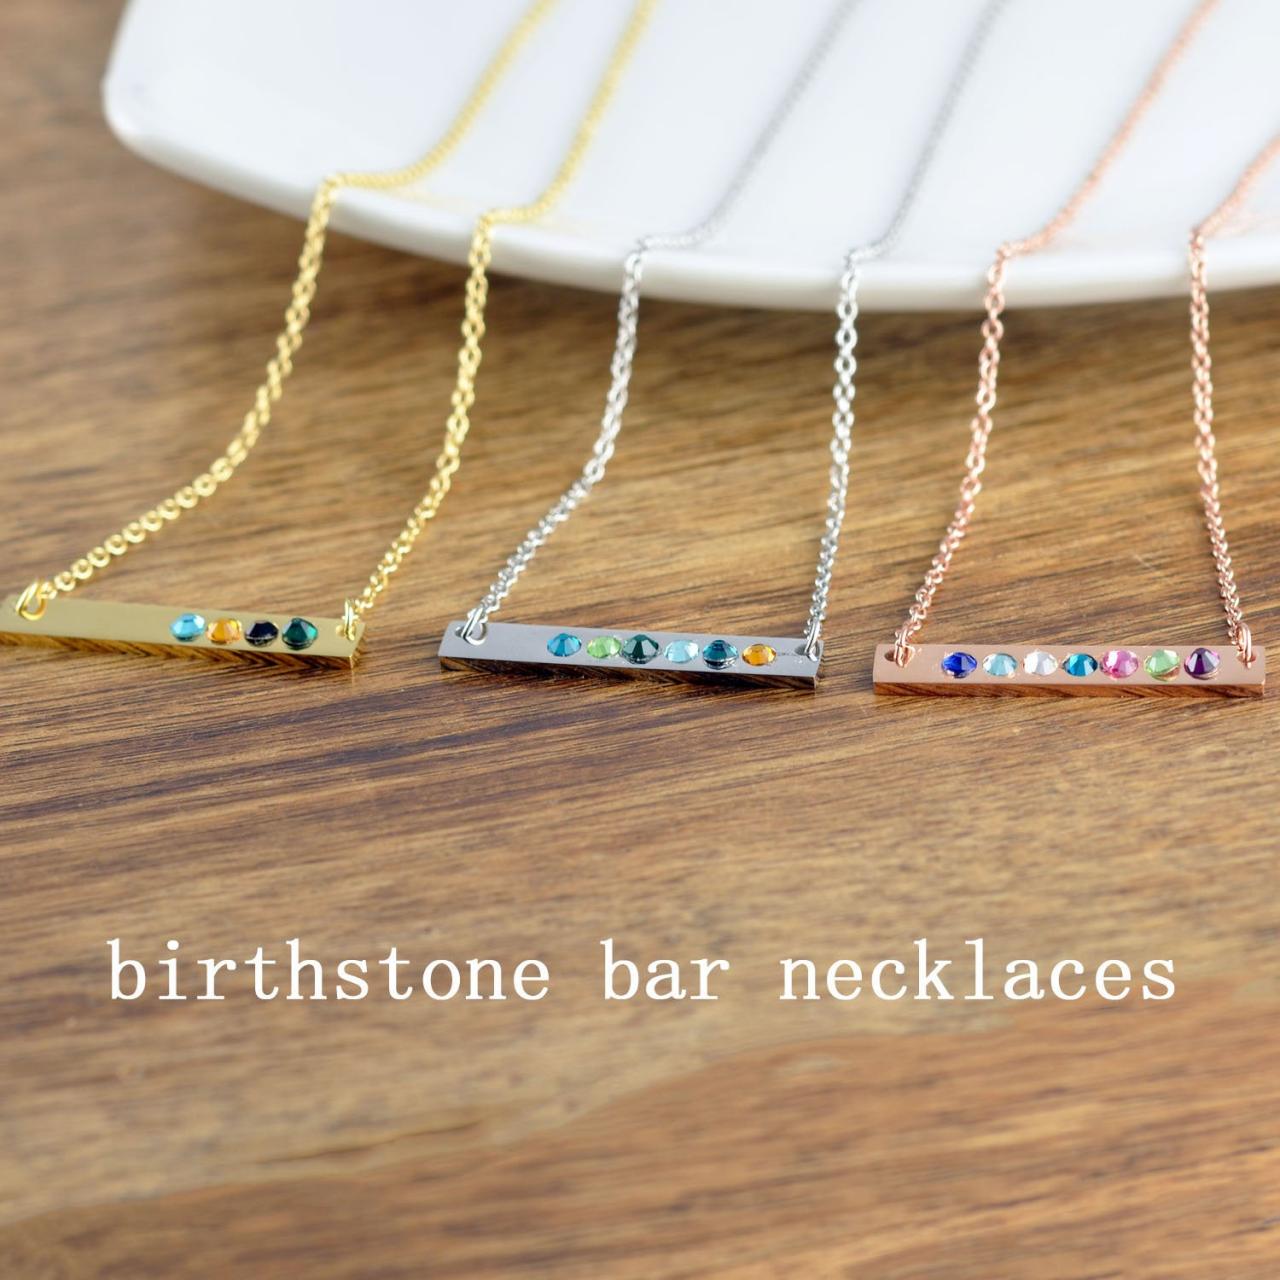 Bar Necklace With Birthstone, Birthstone Necklace For Mom, Mother's Necklace, Birthstone Necklace, Birthstone Jewelry, Grandmother